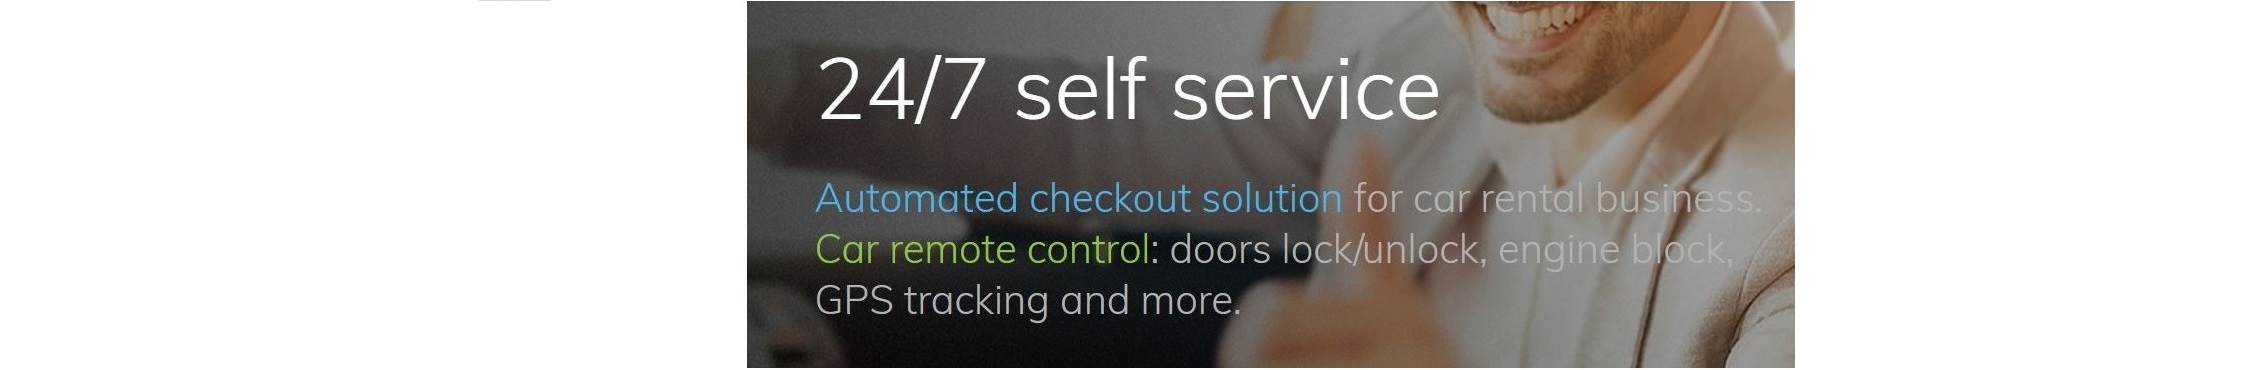 24/7 self-service for car rental customers